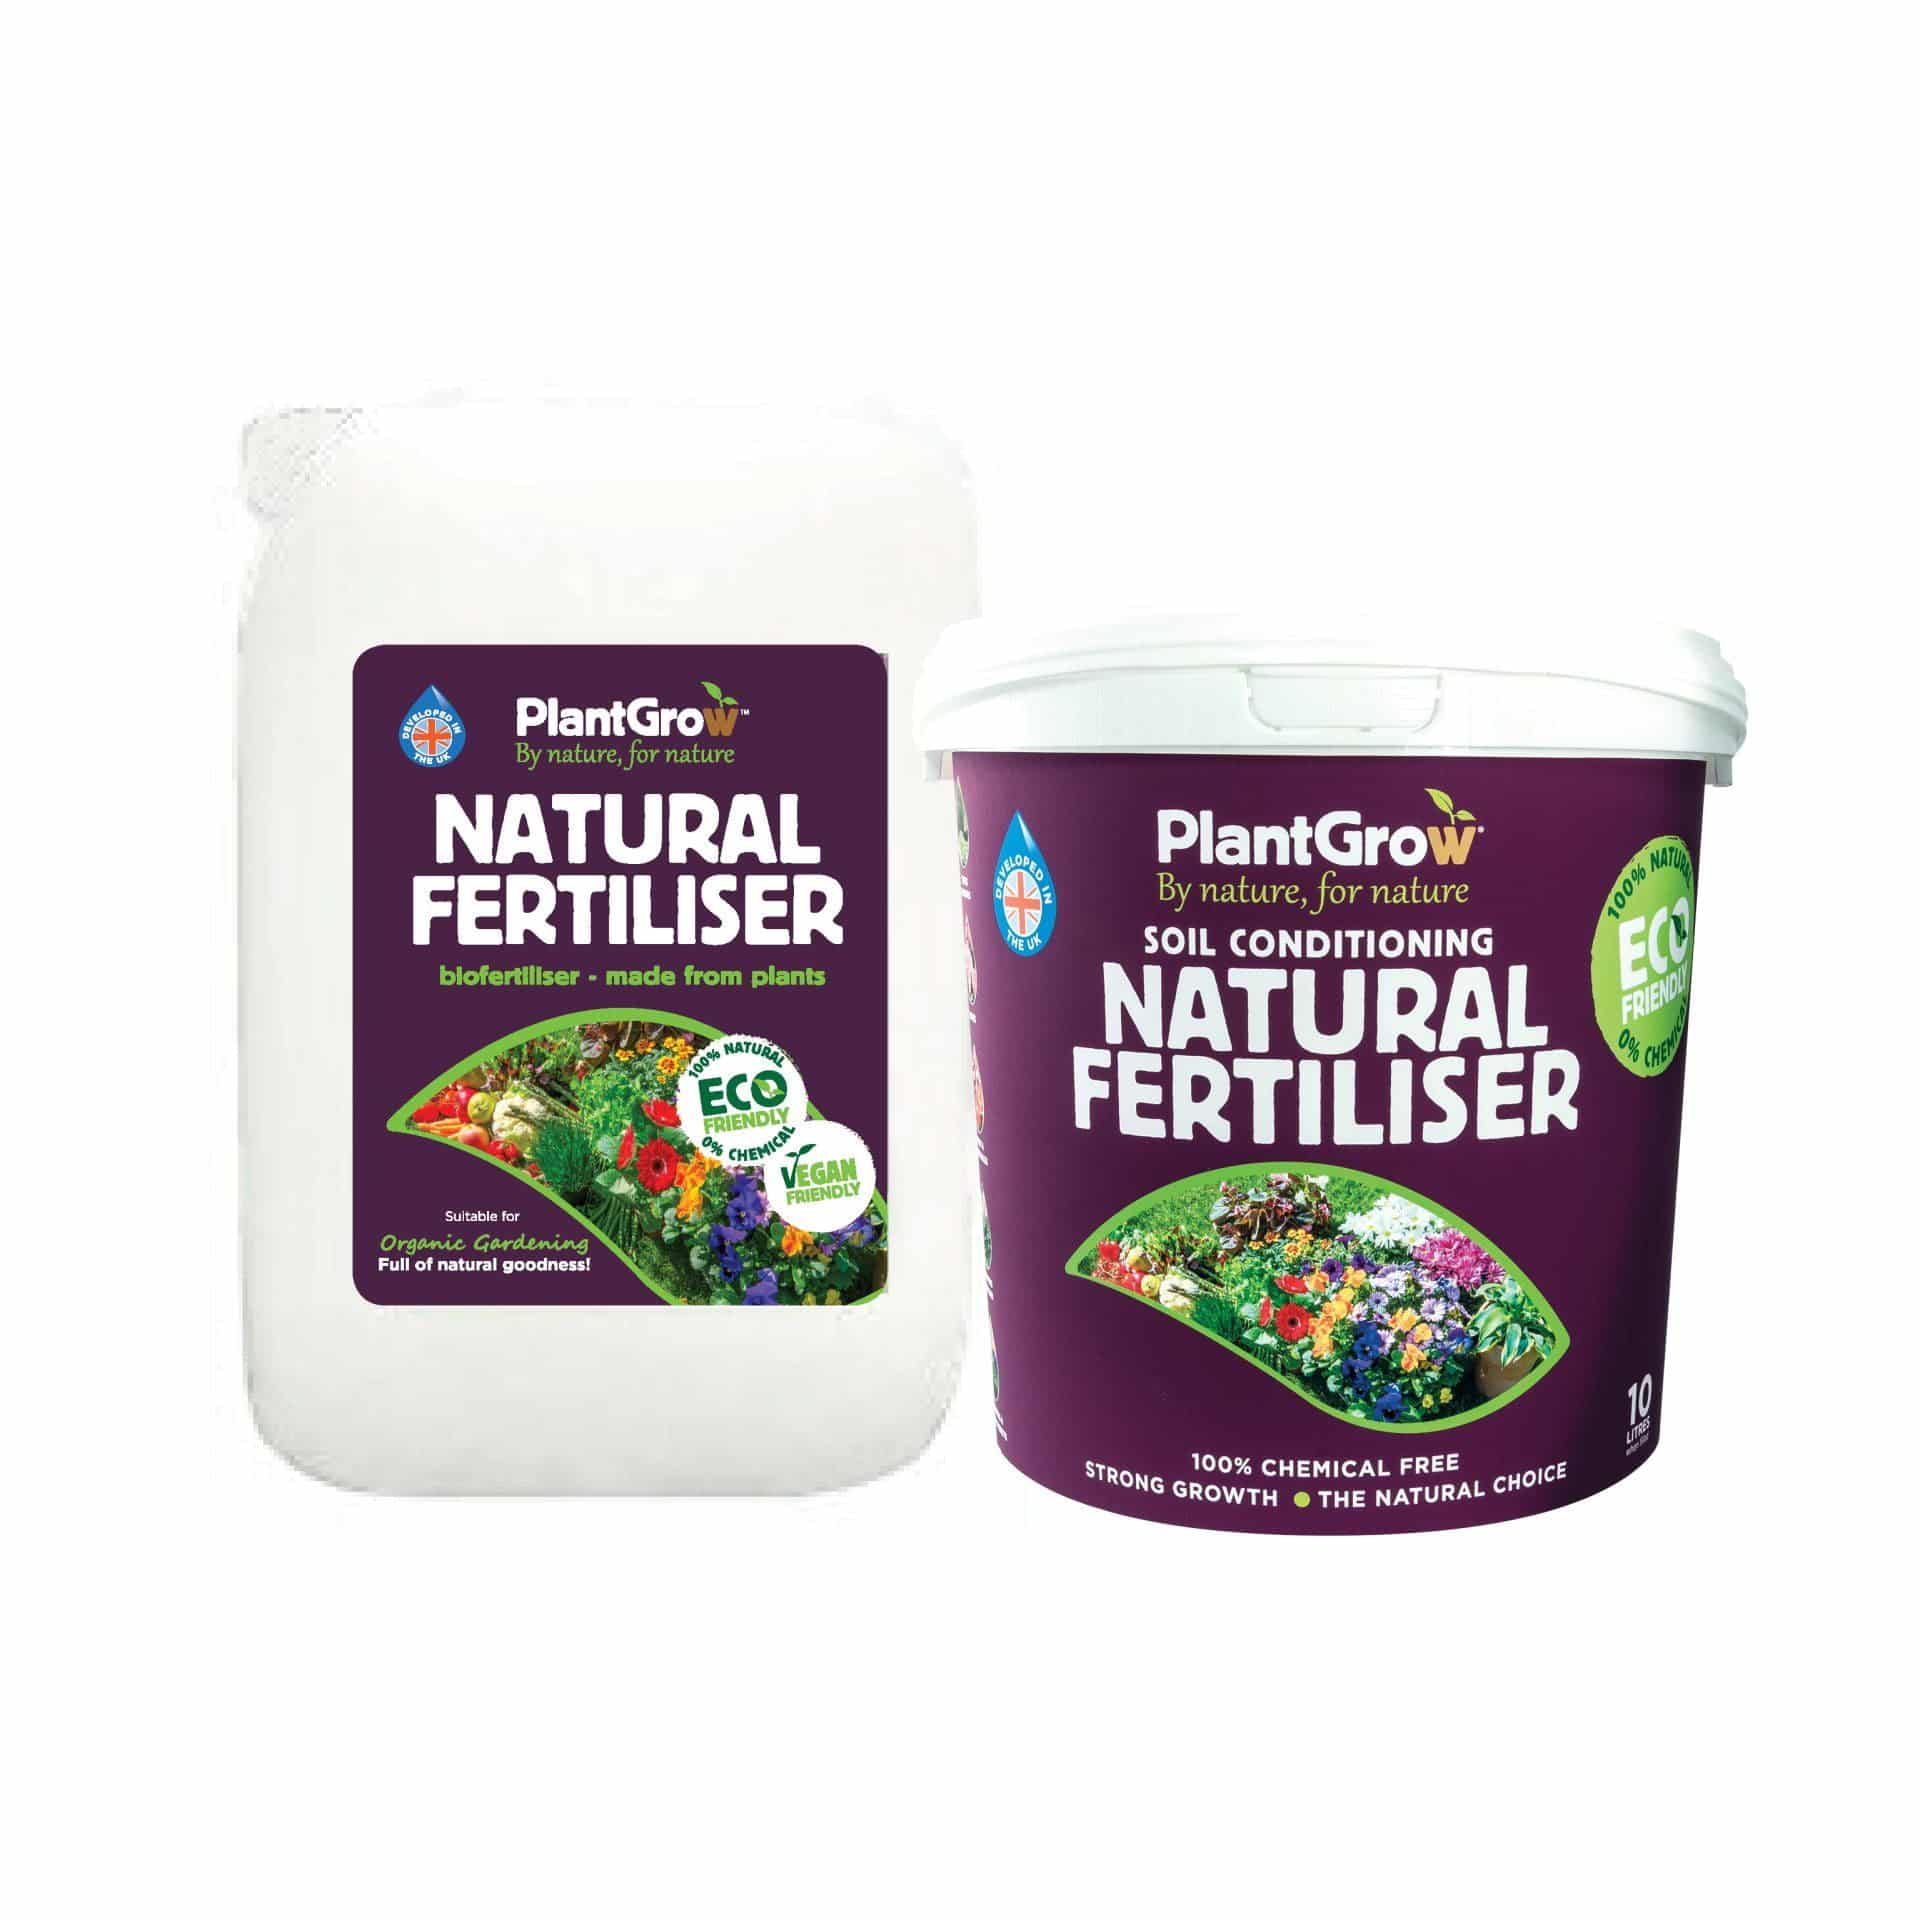 PlantGrow natural fertiliser